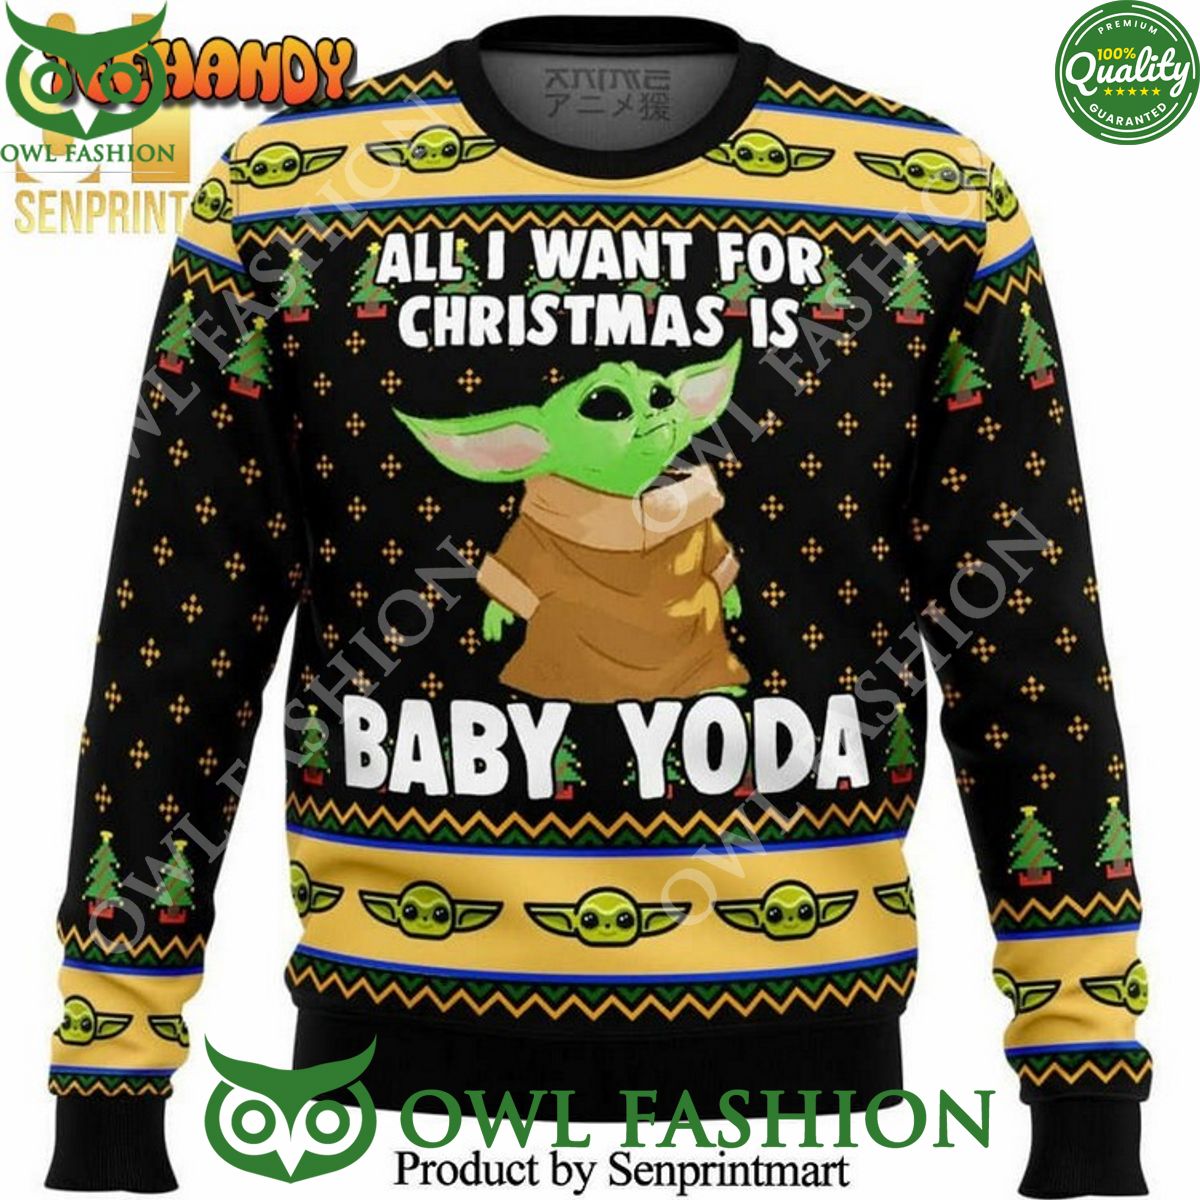 baby yoda all i want mandalorian star wars knitted sweater 1 rrHhd.jpg